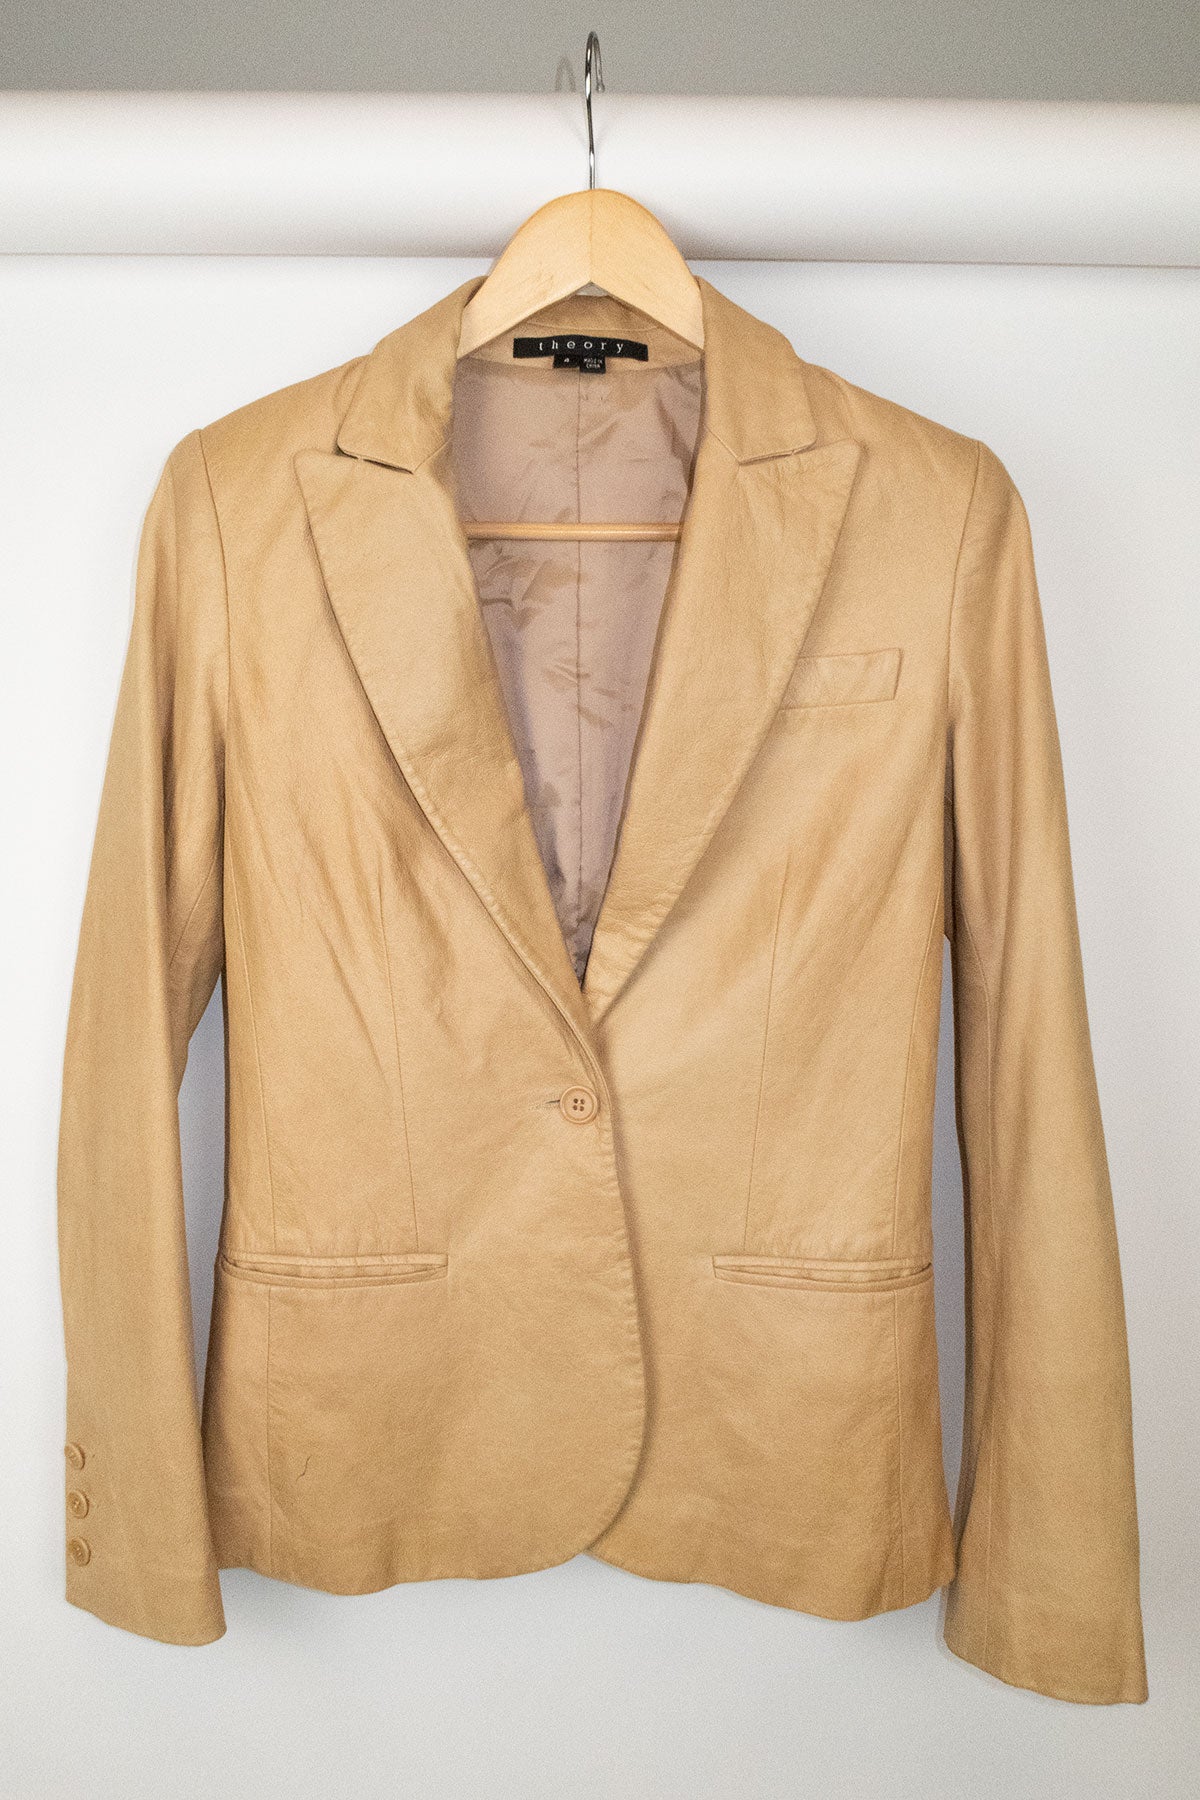 Theory Leather Jacket / XS - Jade Vintage